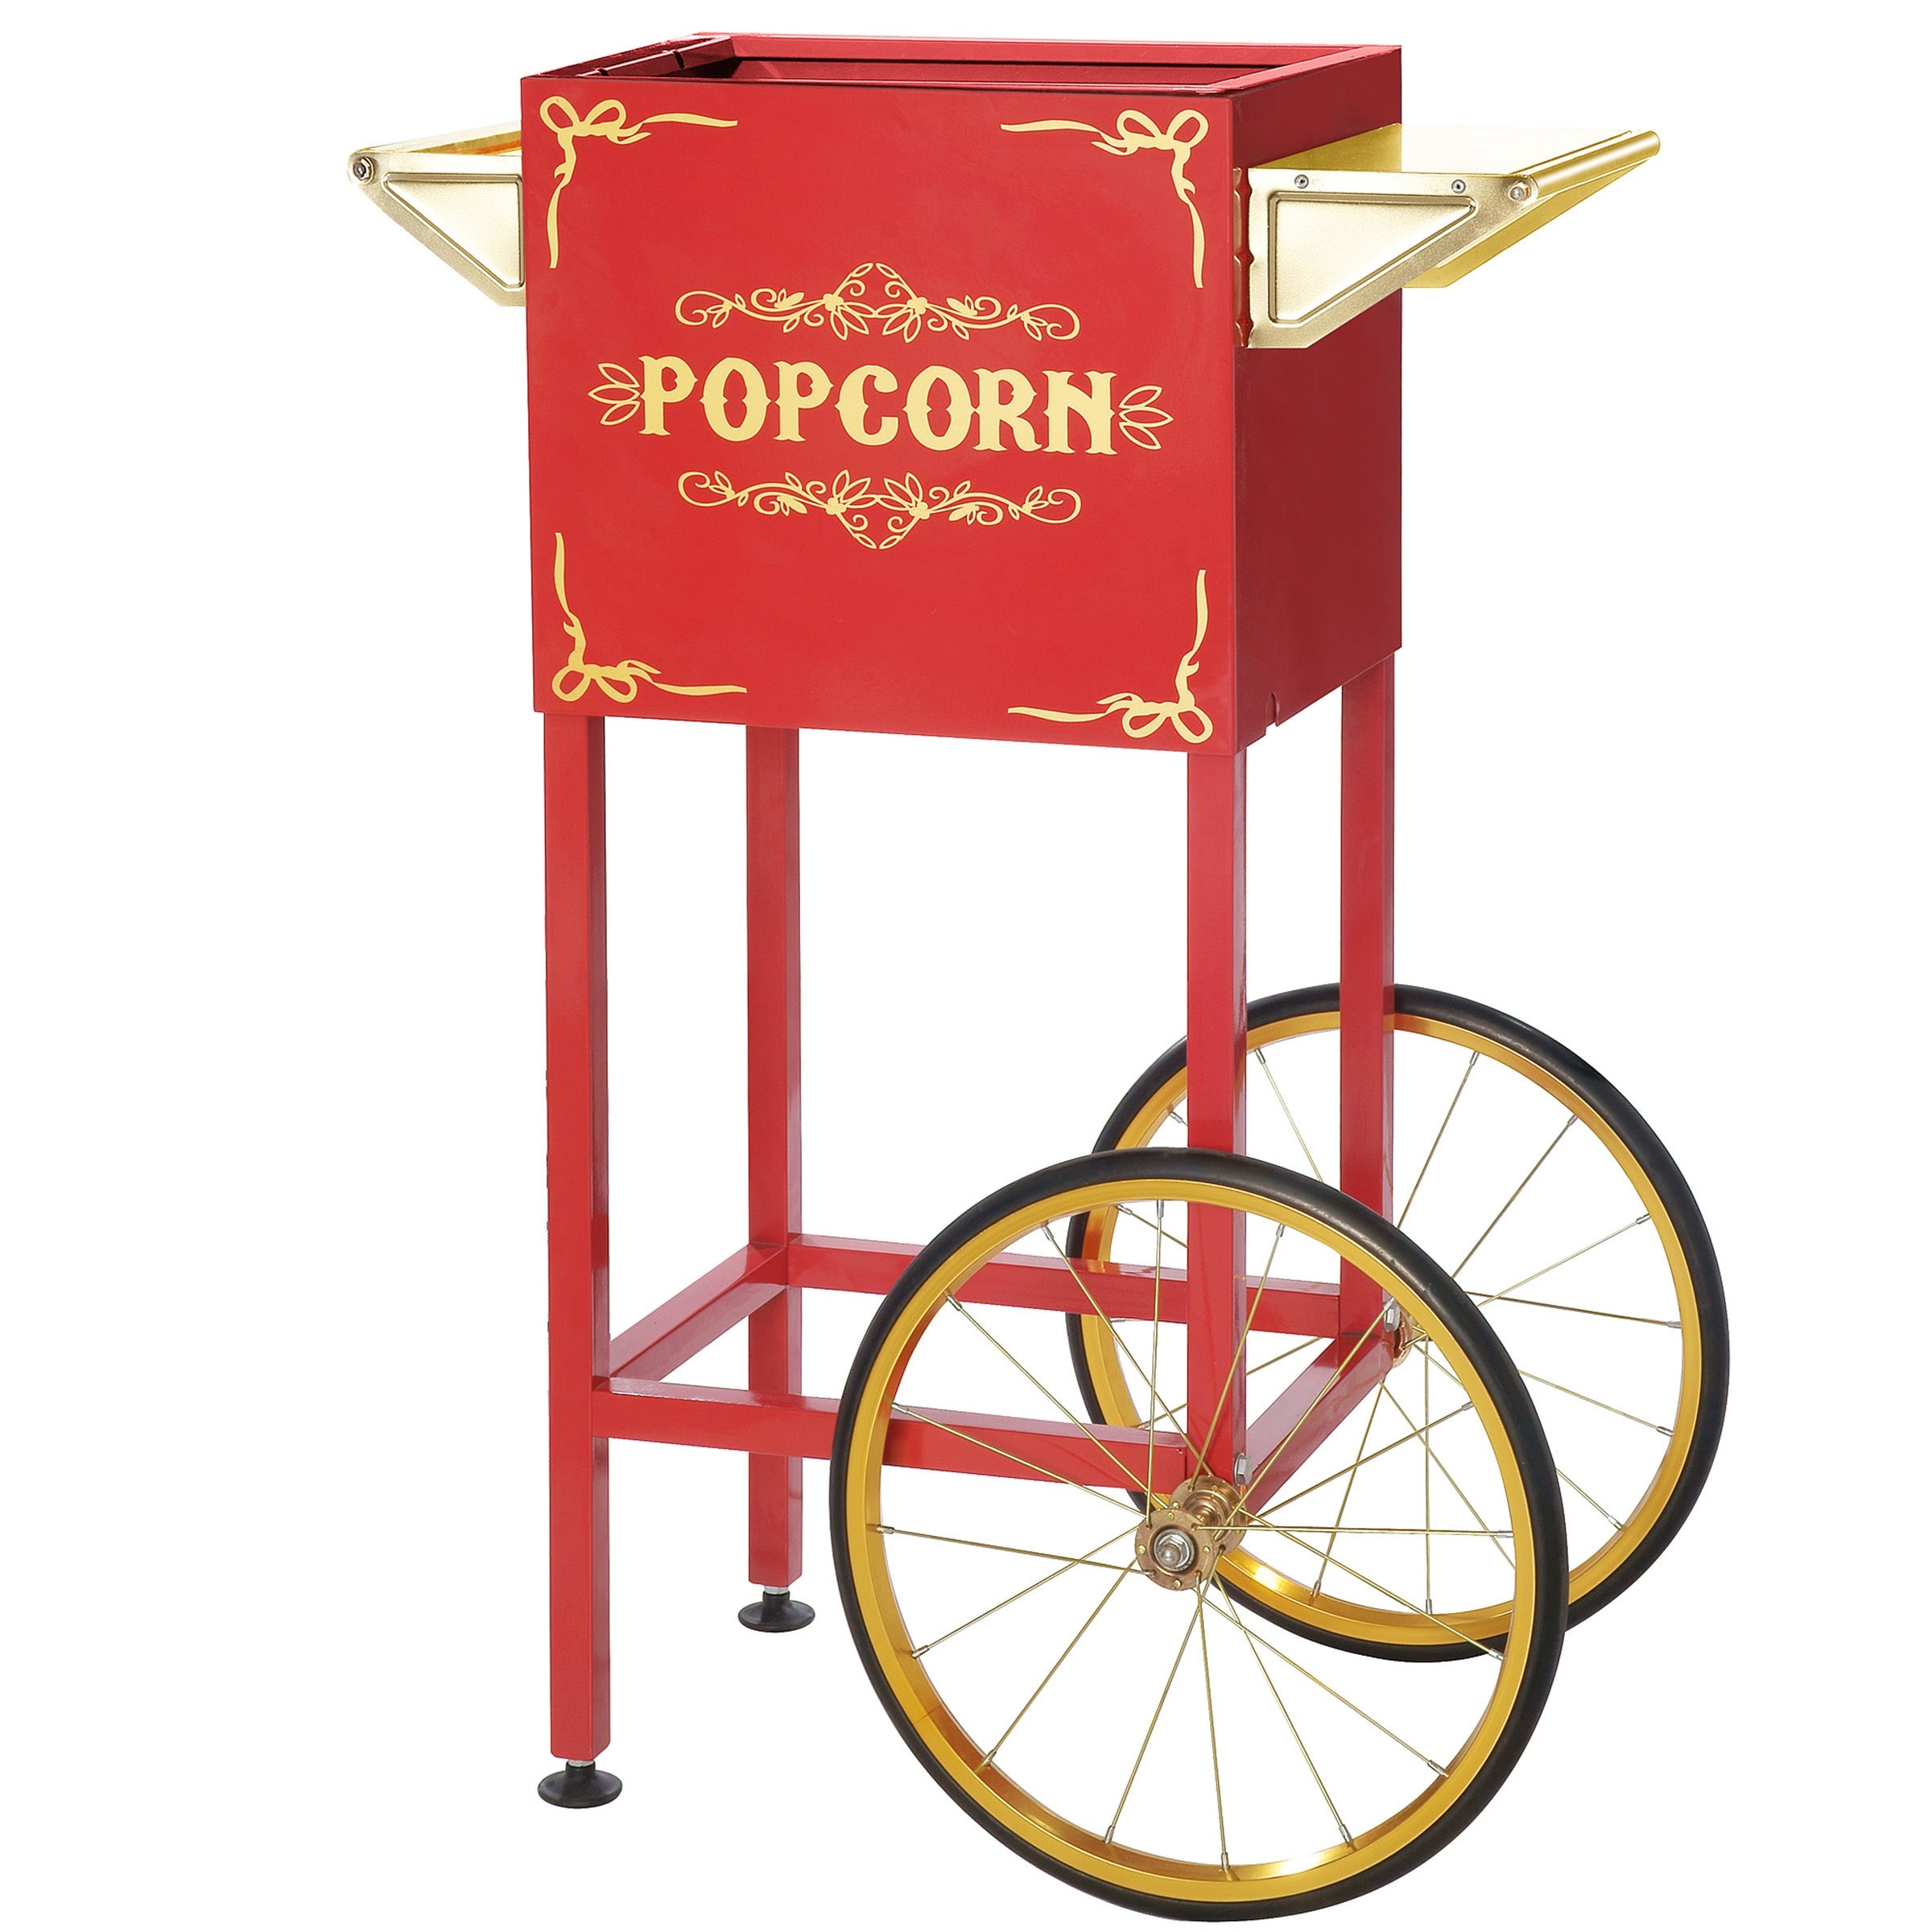 Great Northern Popcorn Red Countertop Foundation Popcorn Popper Machine 8oz